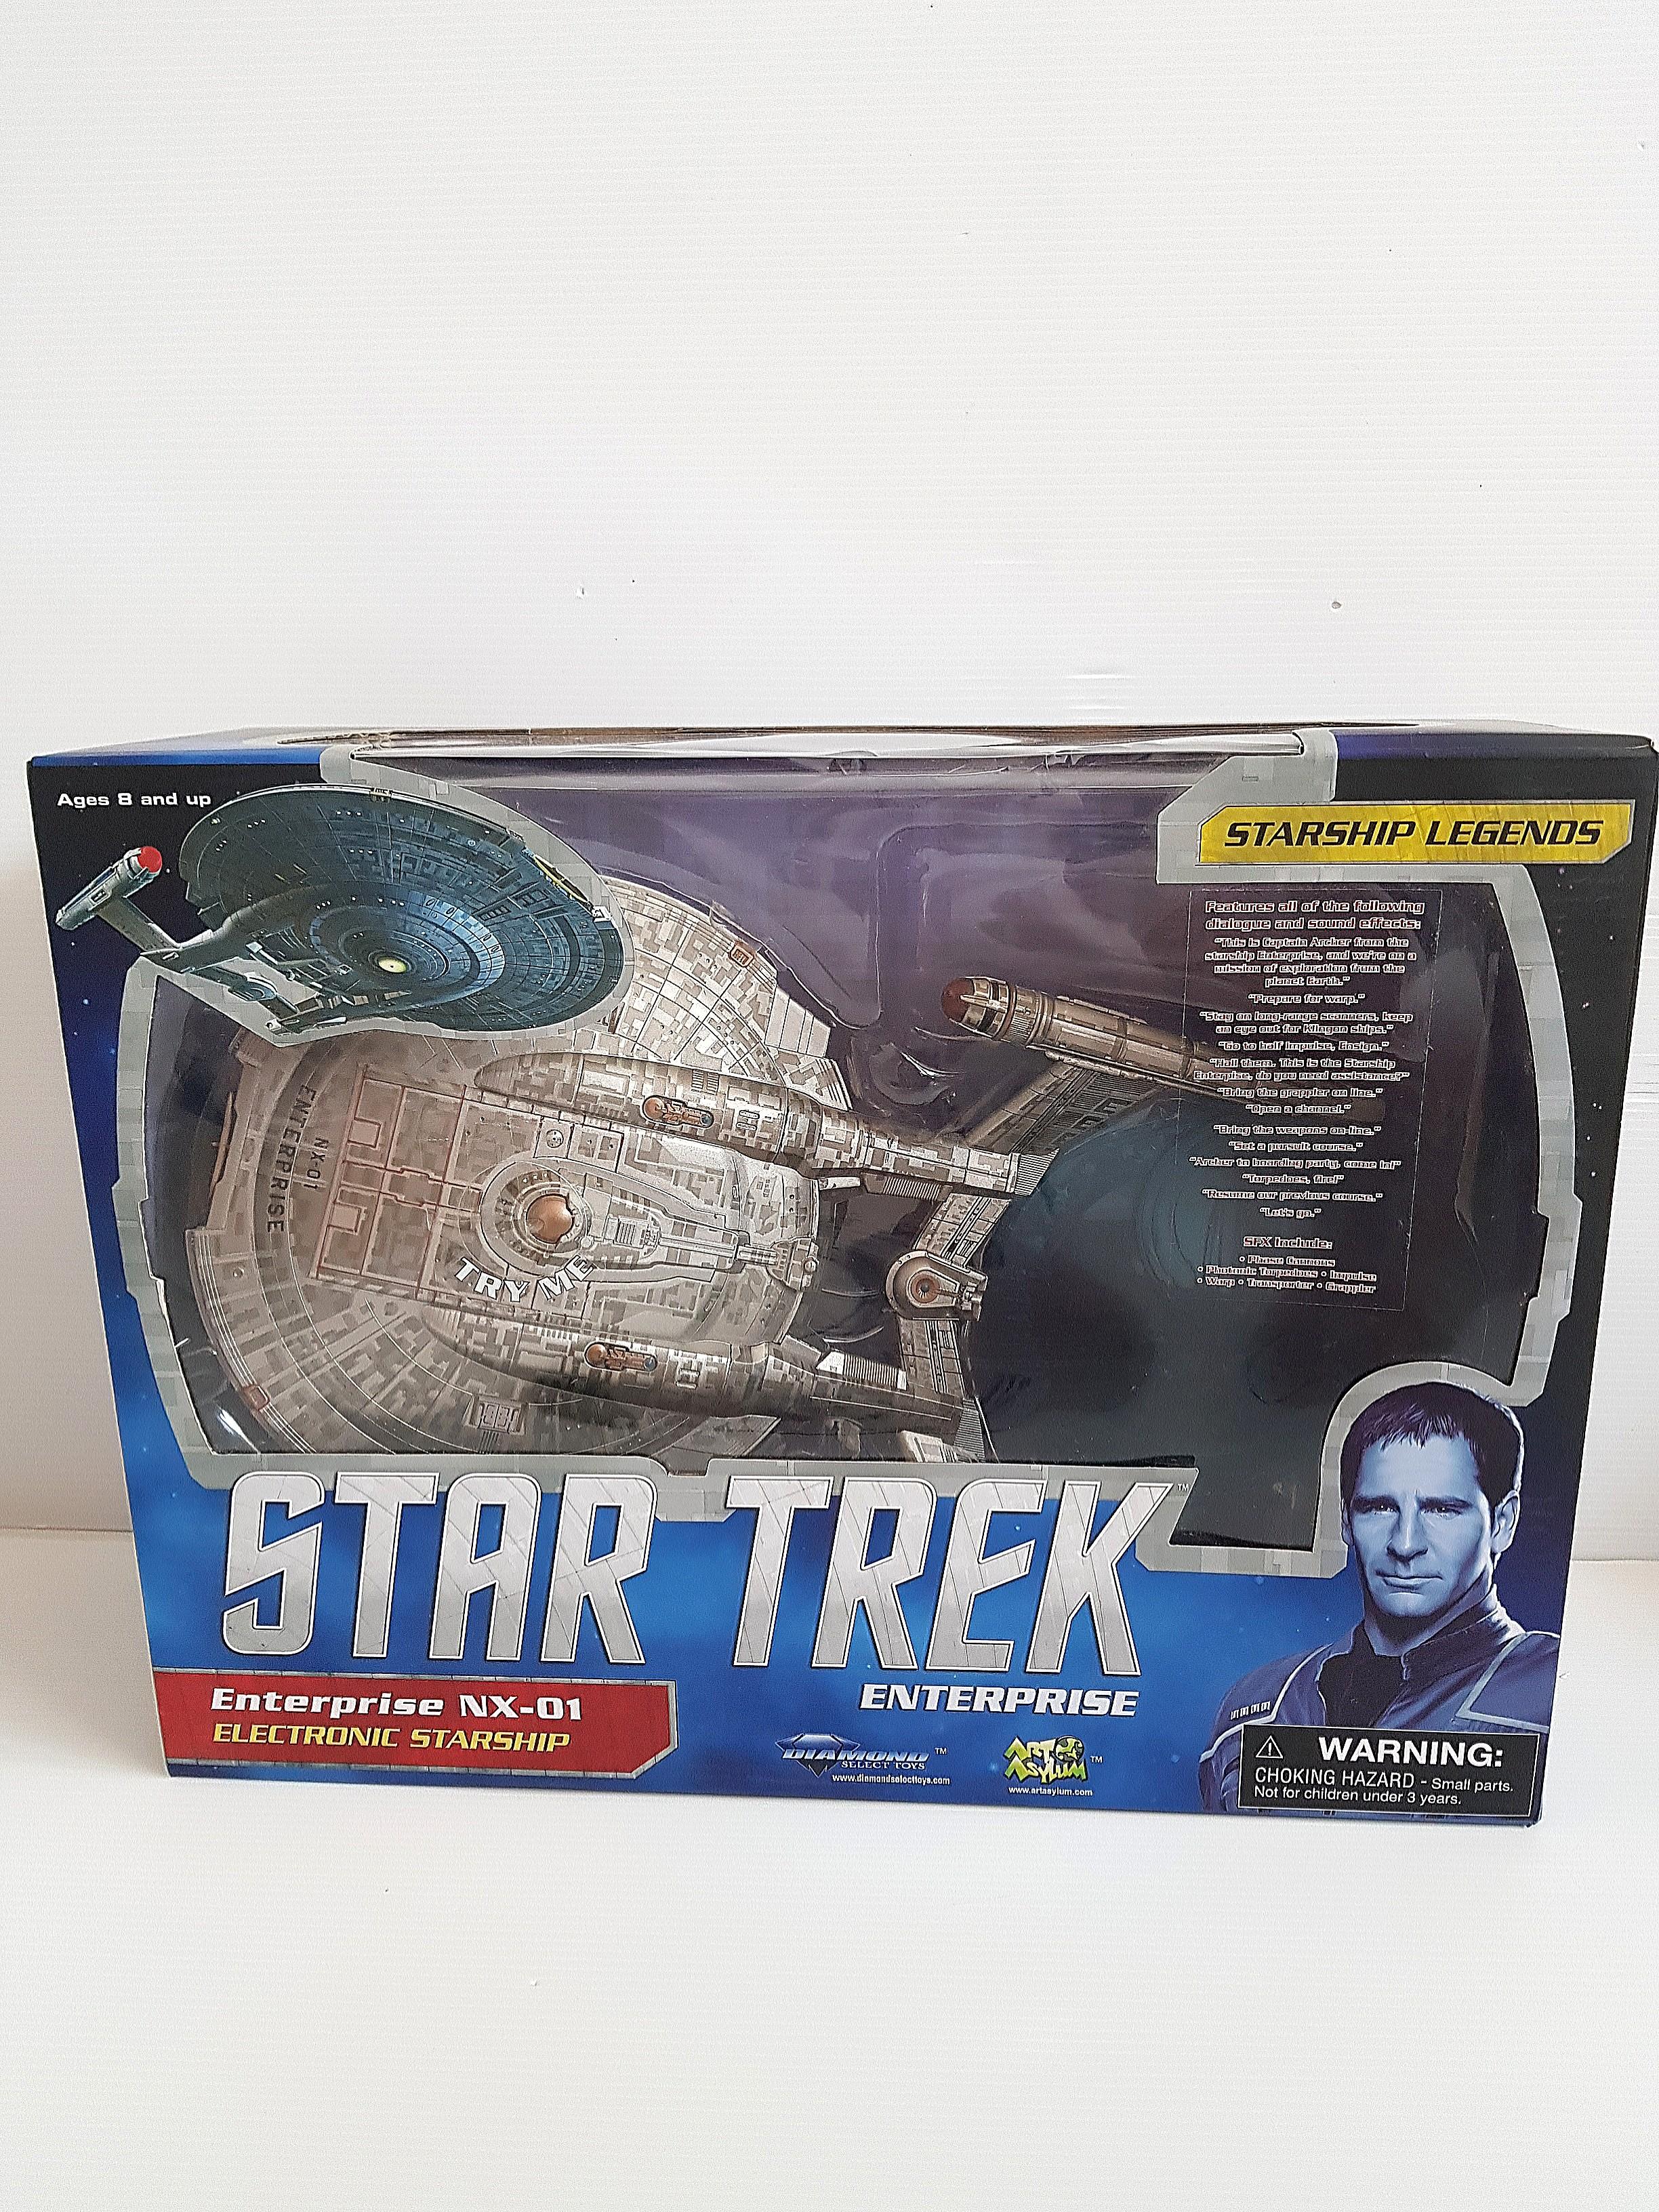 NX-01 Electronic Starship Diamond Select Toys Star Trek Enterprise 